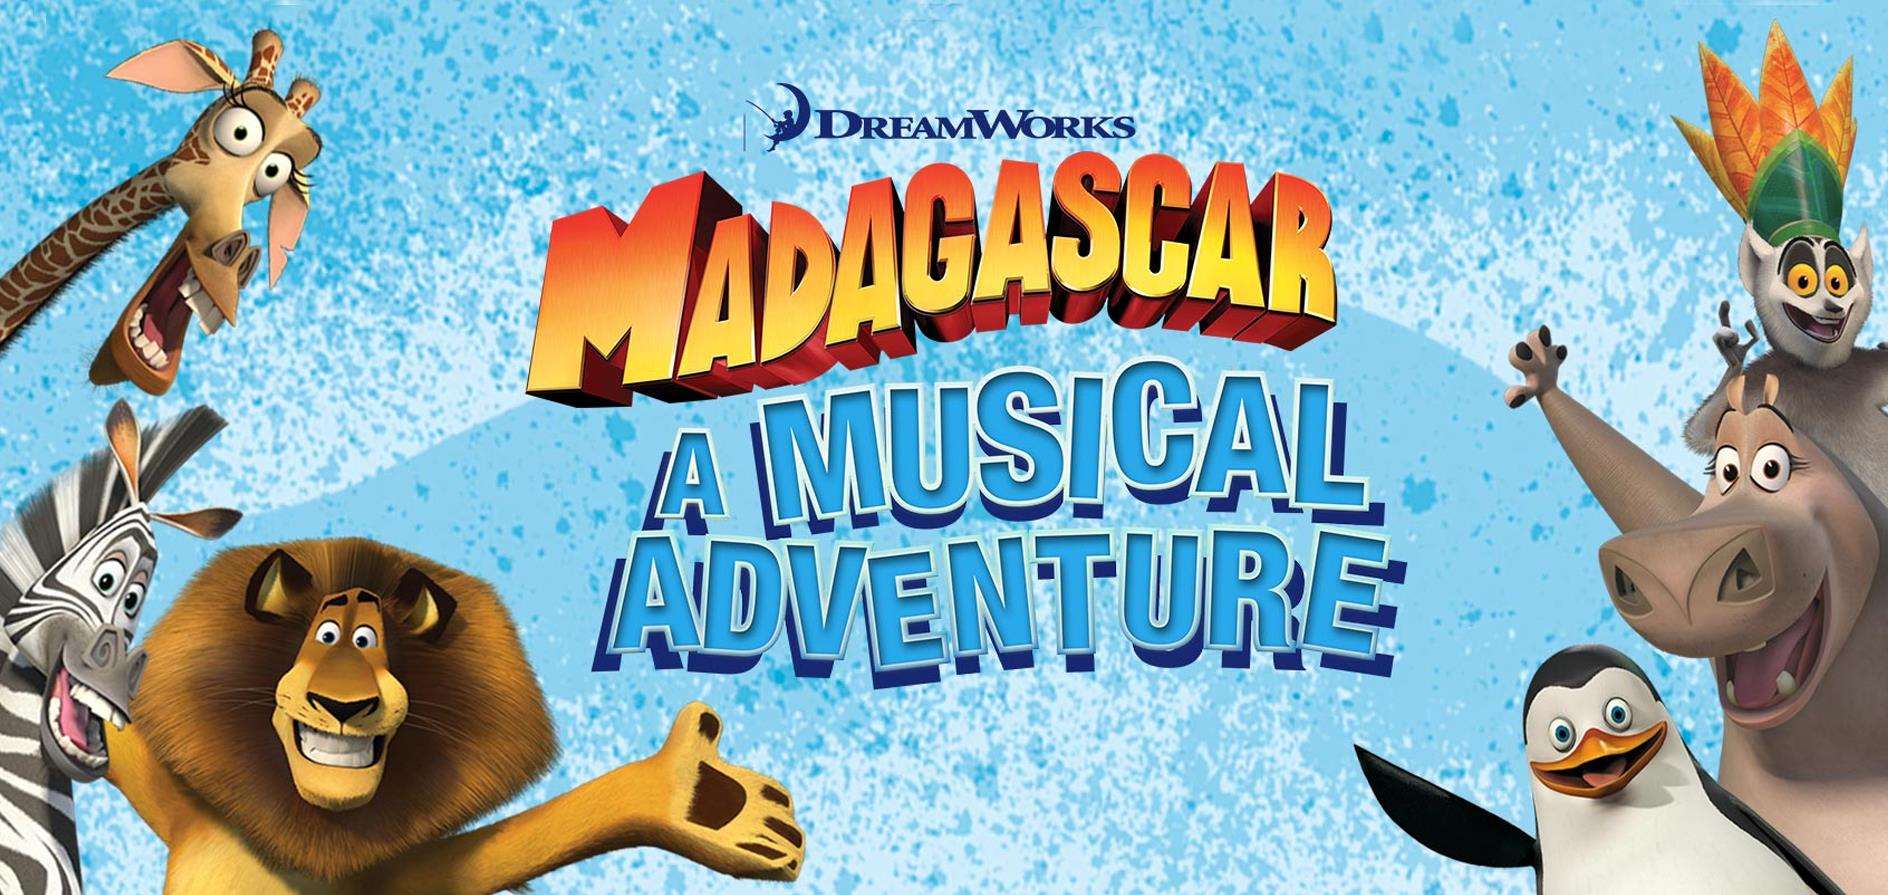 Matt Terry will star in Madagascar the Musical